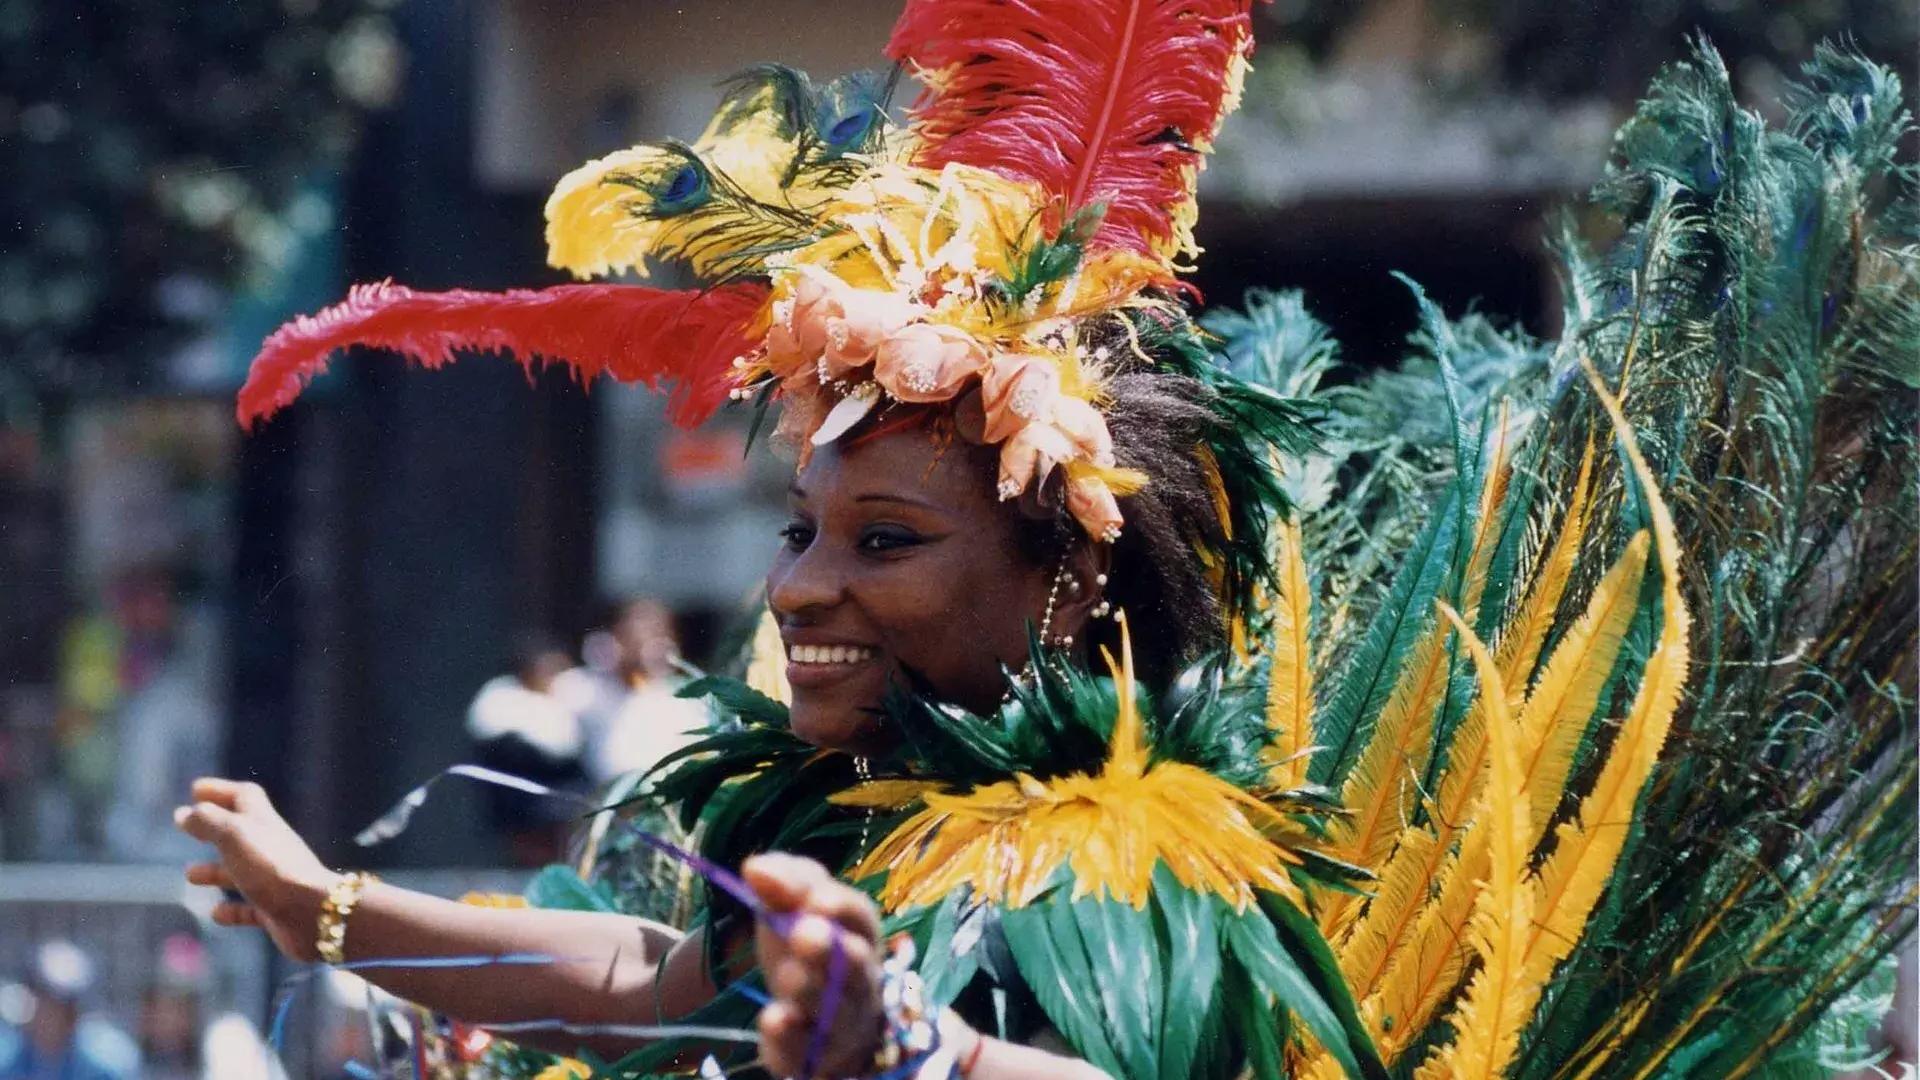 Dancer in the Carnaval celebration